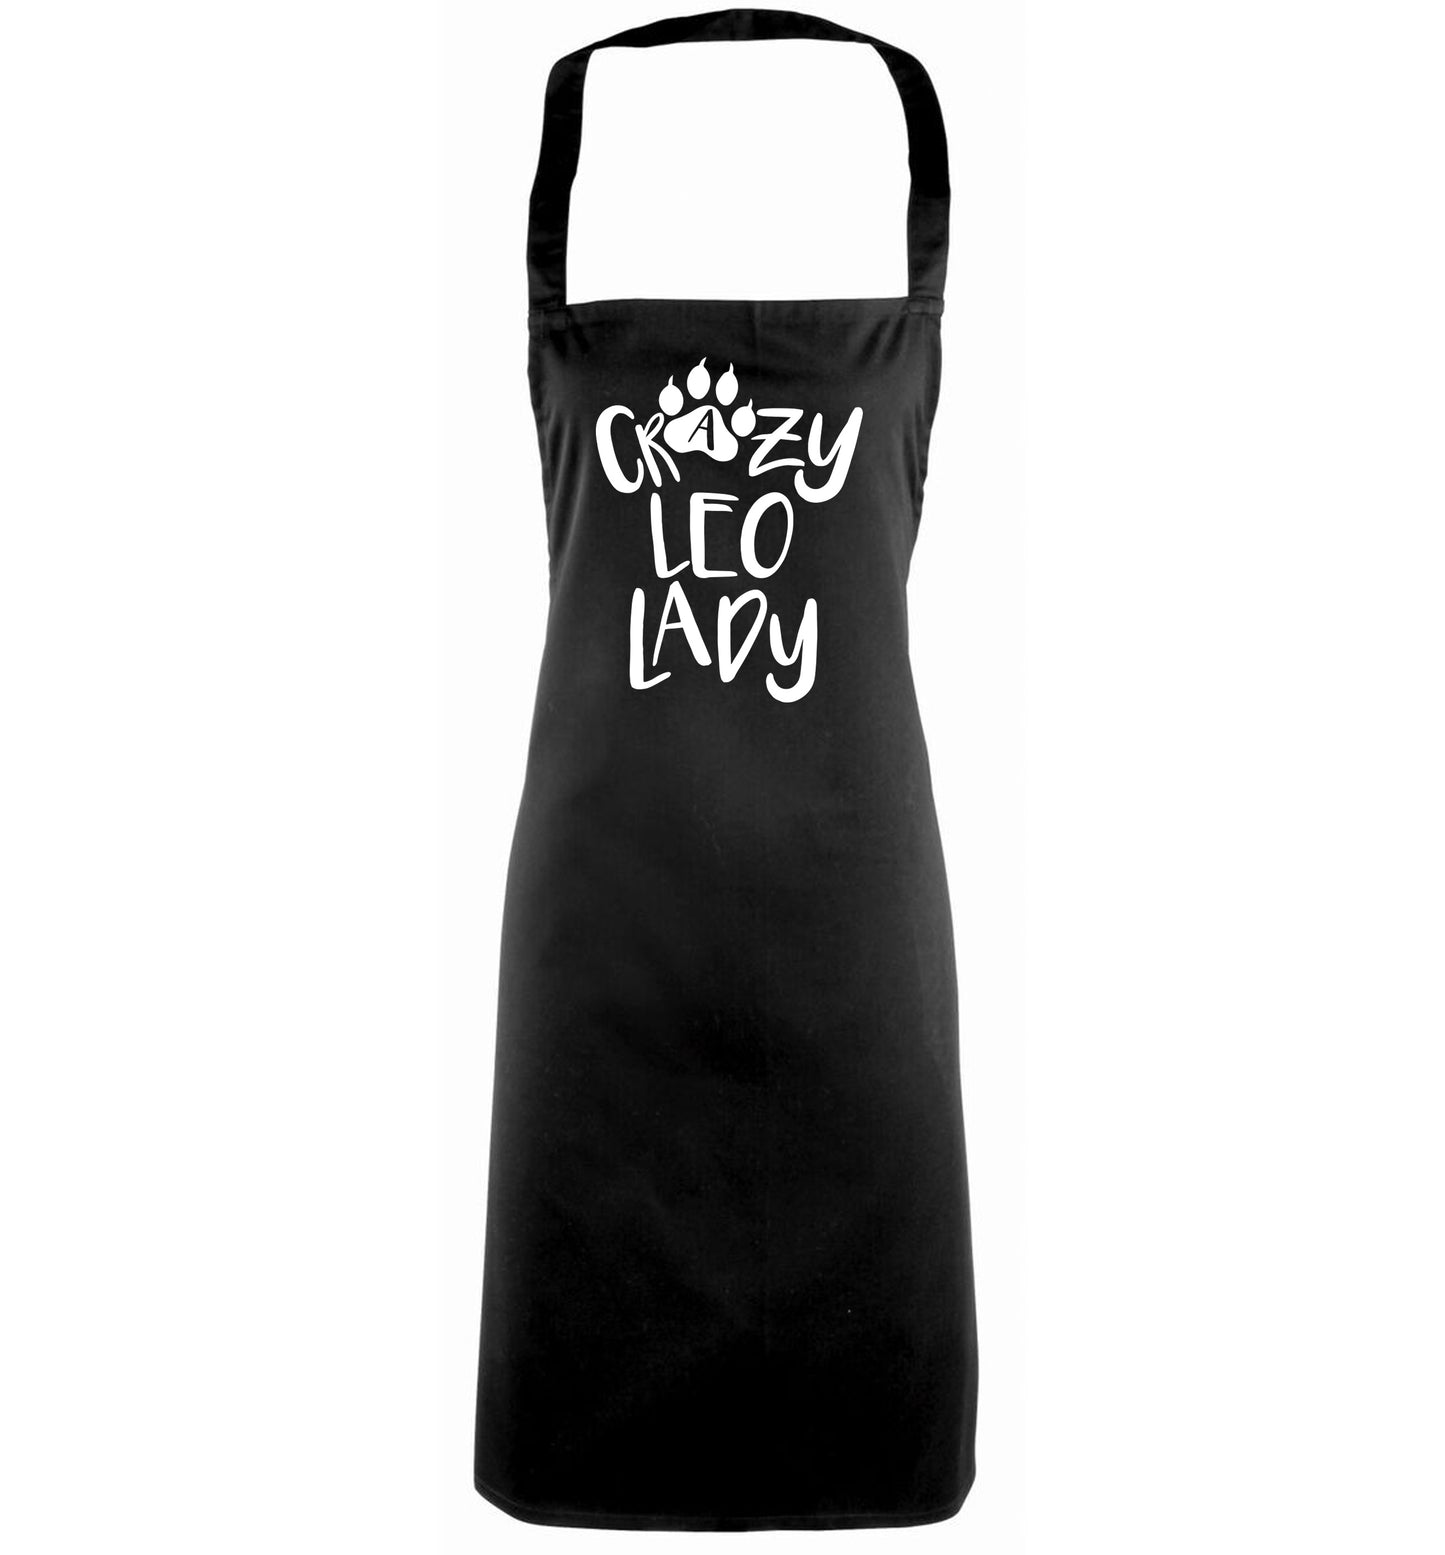 Crazy leo lady black apron